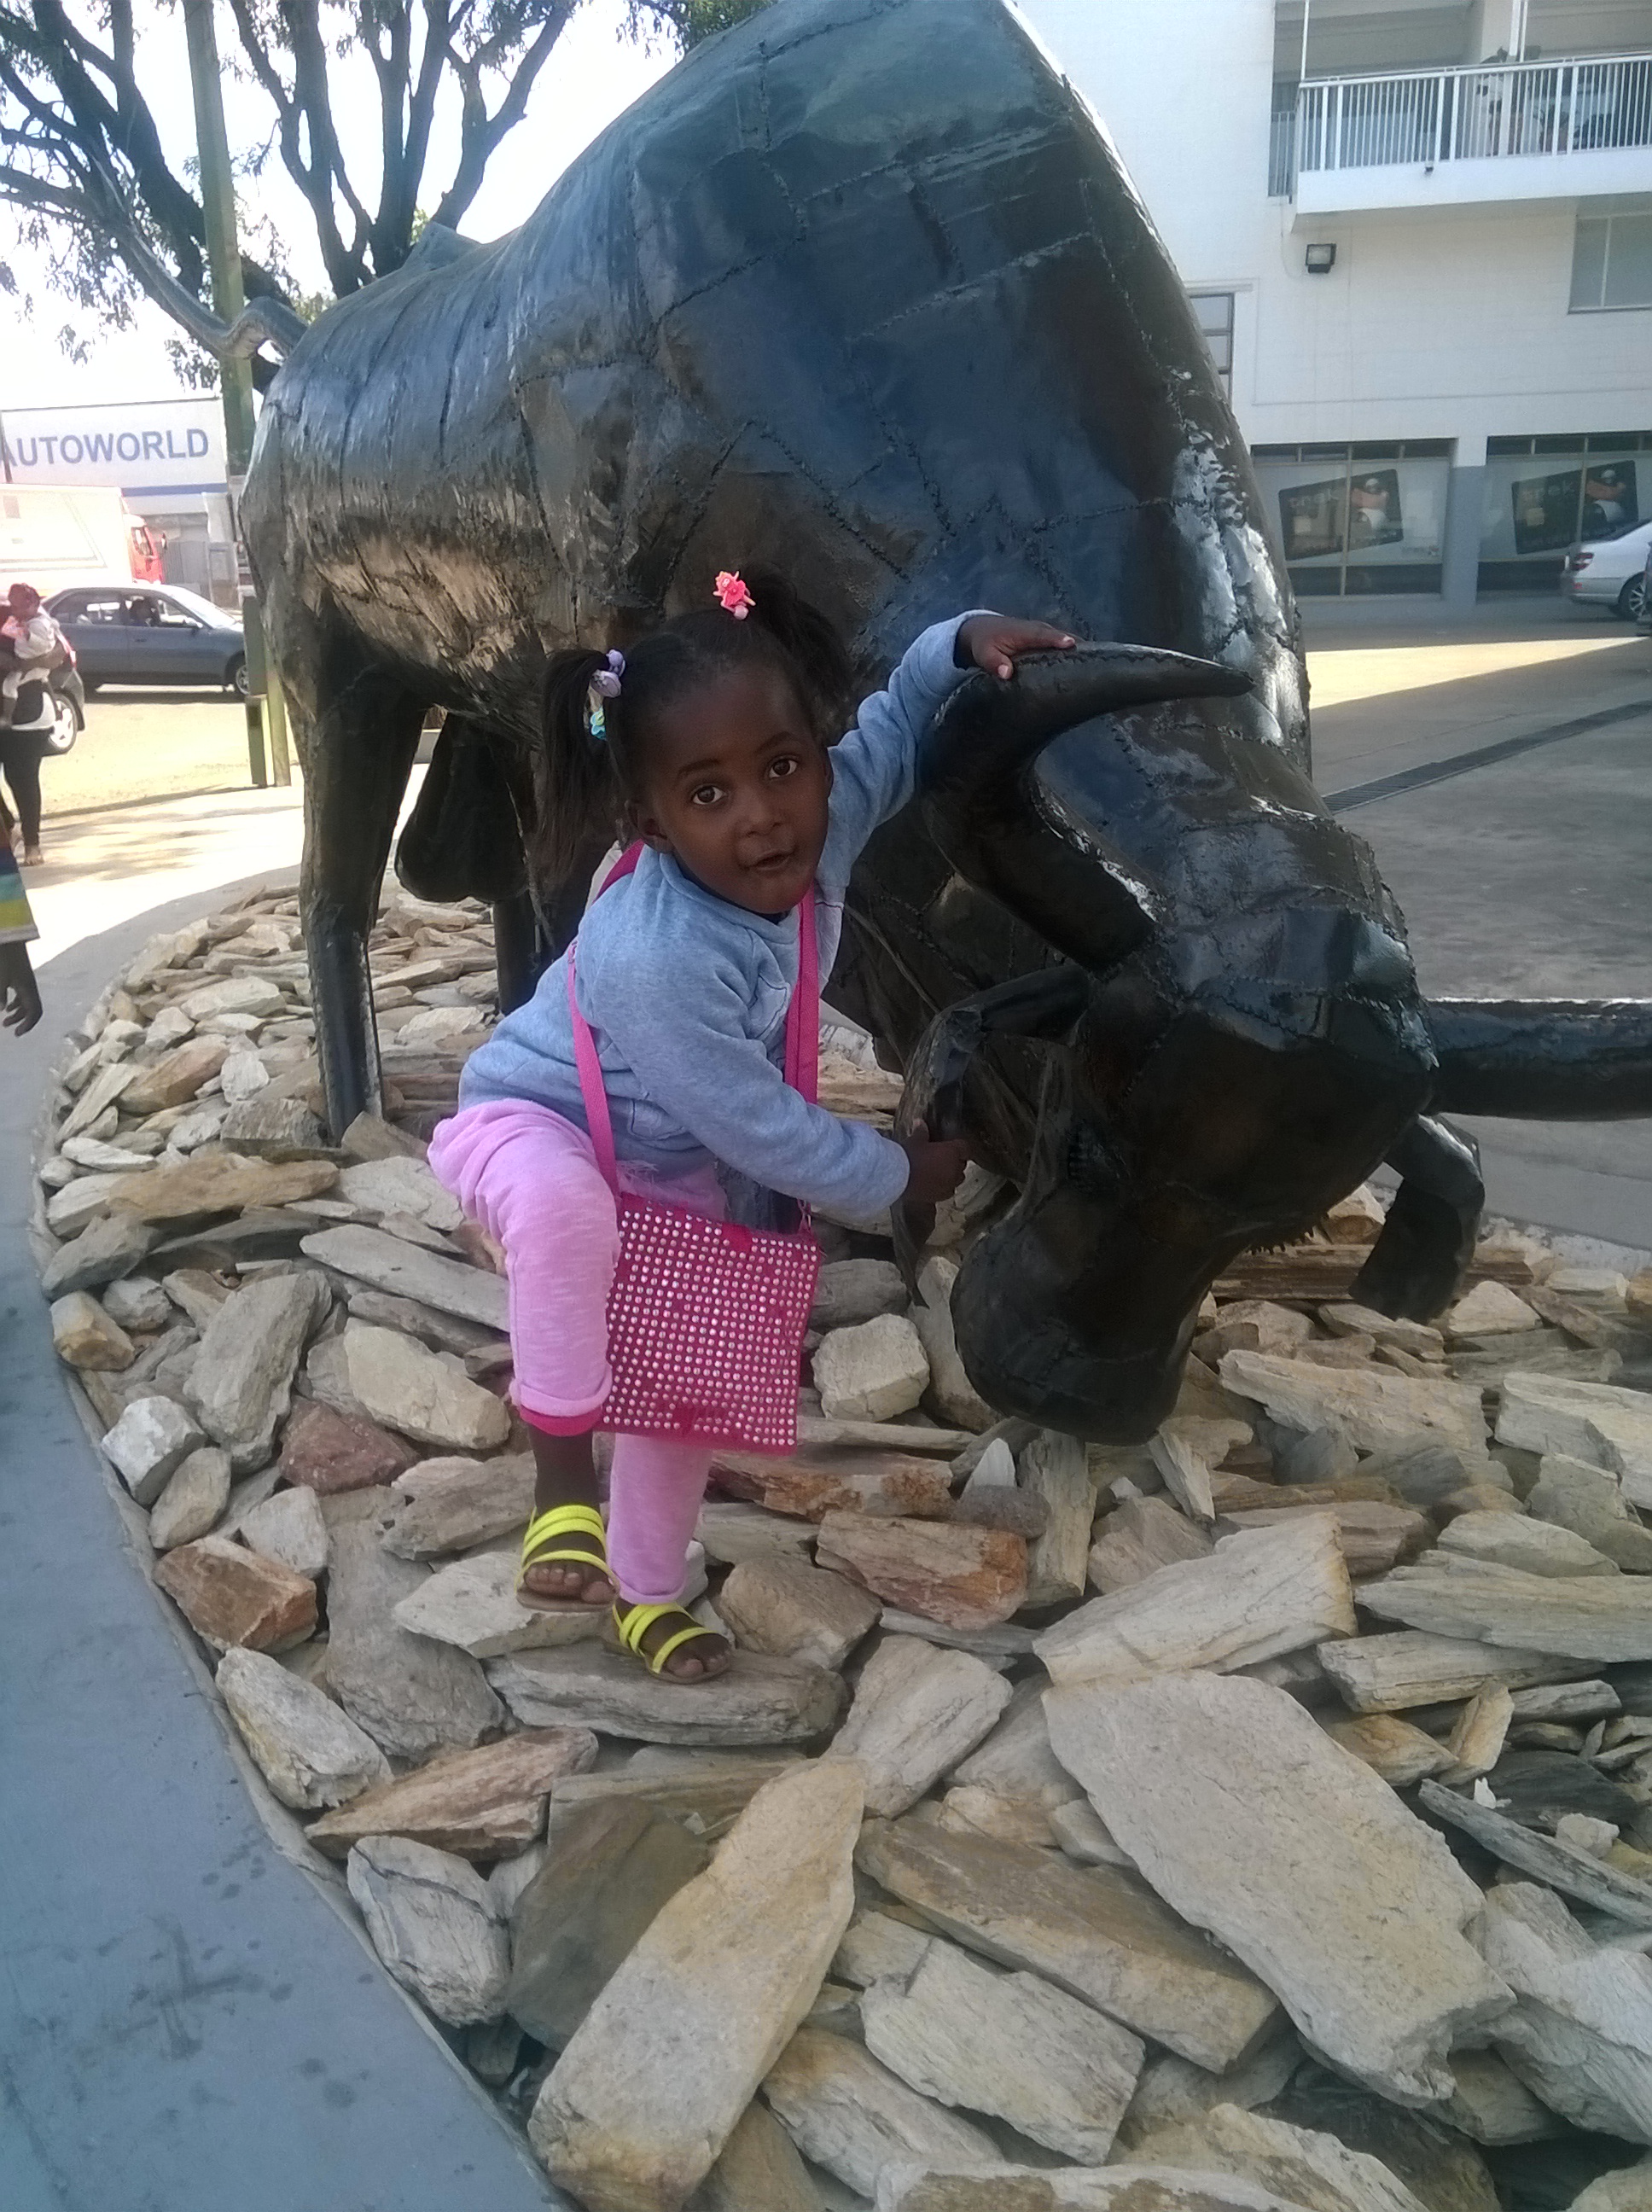 Taming the bull photo